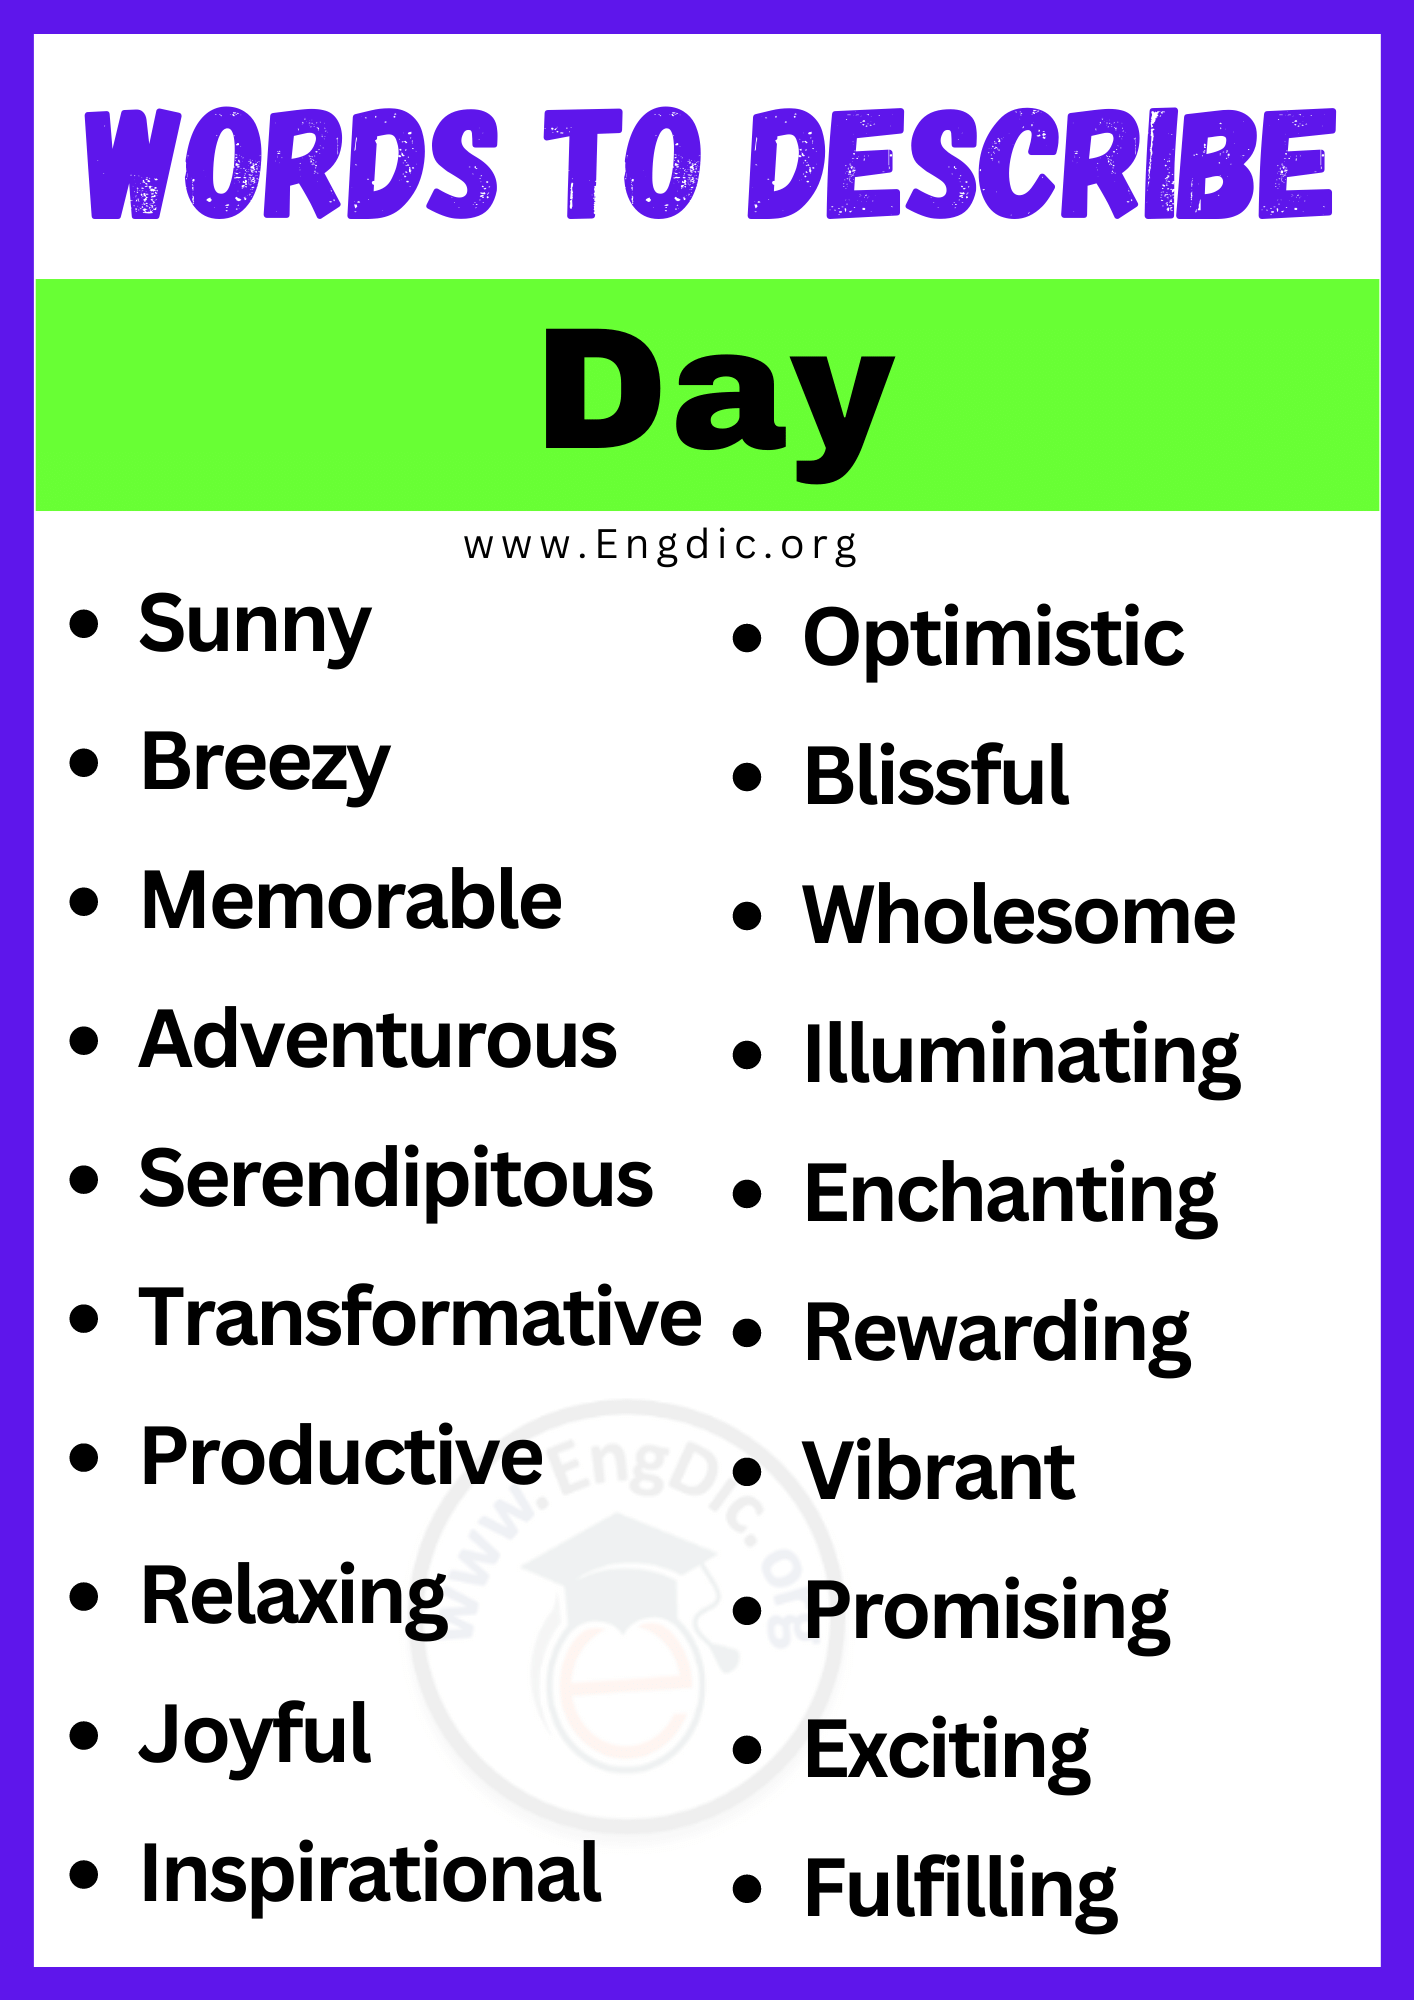 Words to Describe a Day